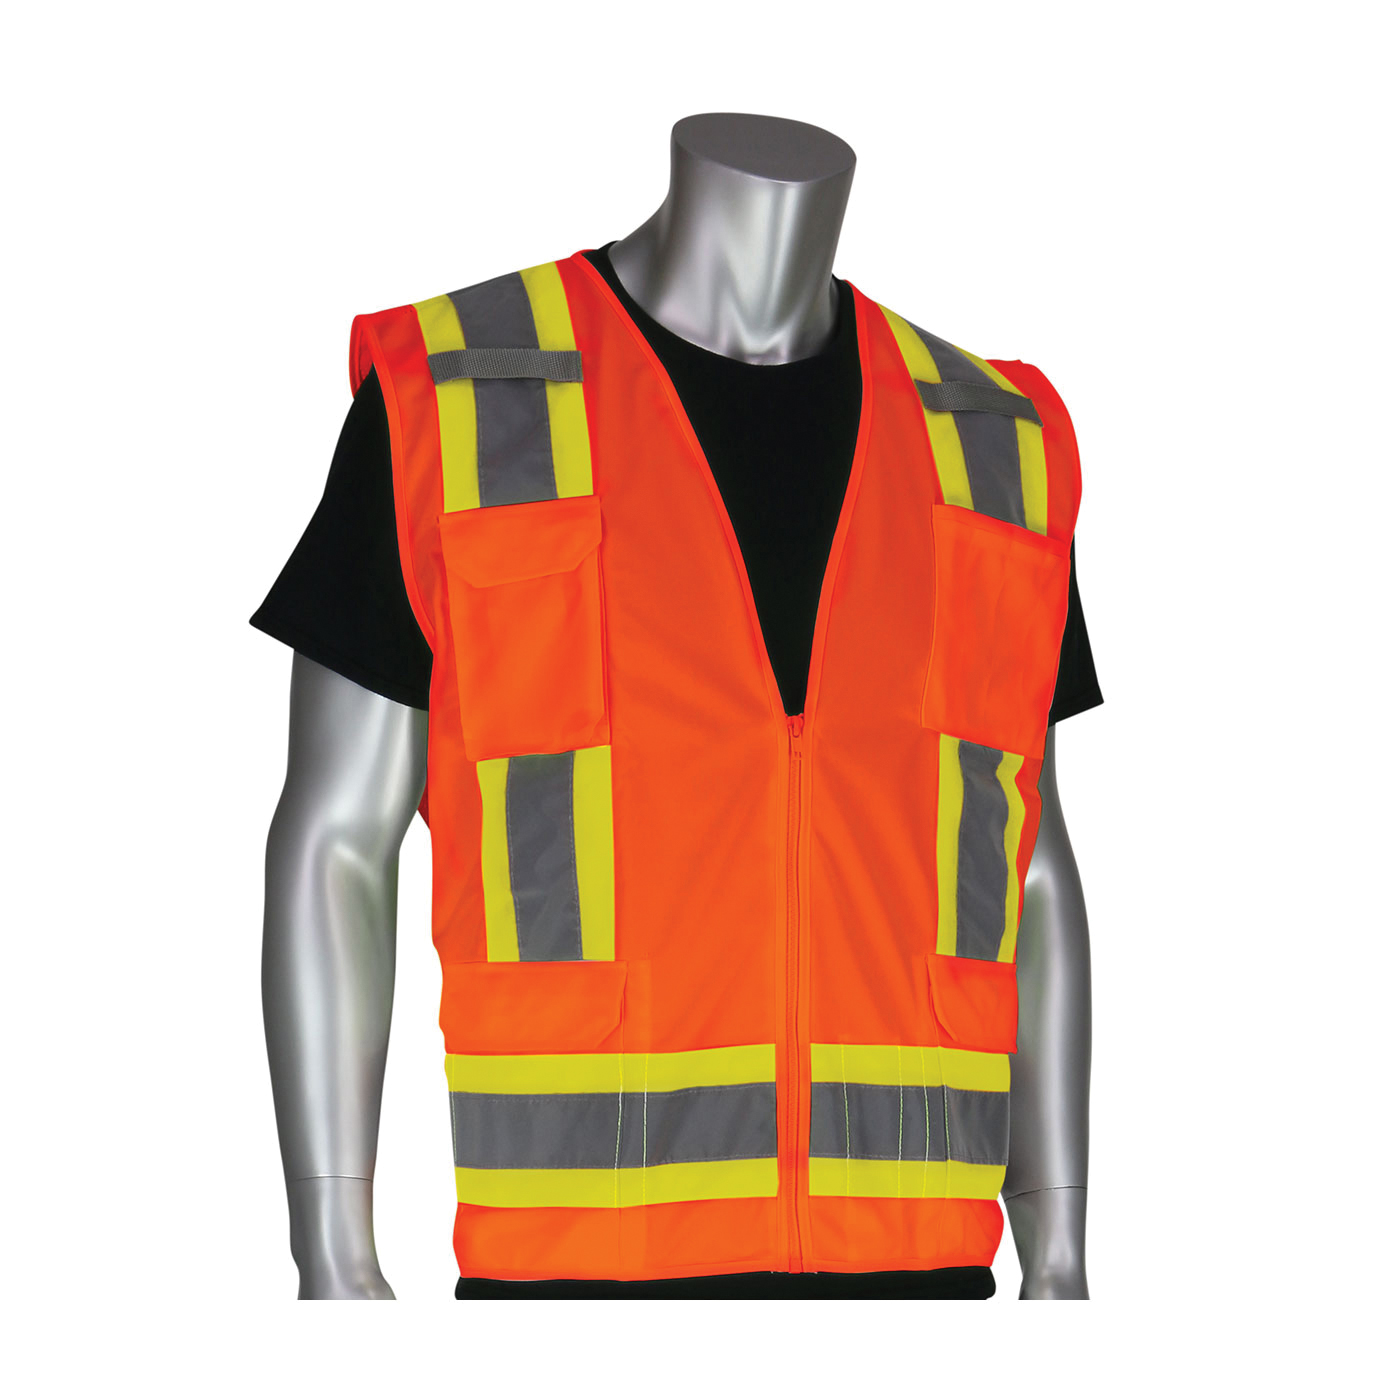 PIP® 302-0500-ORG/4X 2-Tone Surveyor Safety Vest, 4XL, Hi-Viz Orange, Polyester/Solid Tricot, Zipper Closure, 11 Pockets, ANSI Class: Class 2, Specifications Met: ANSI 107 Type R